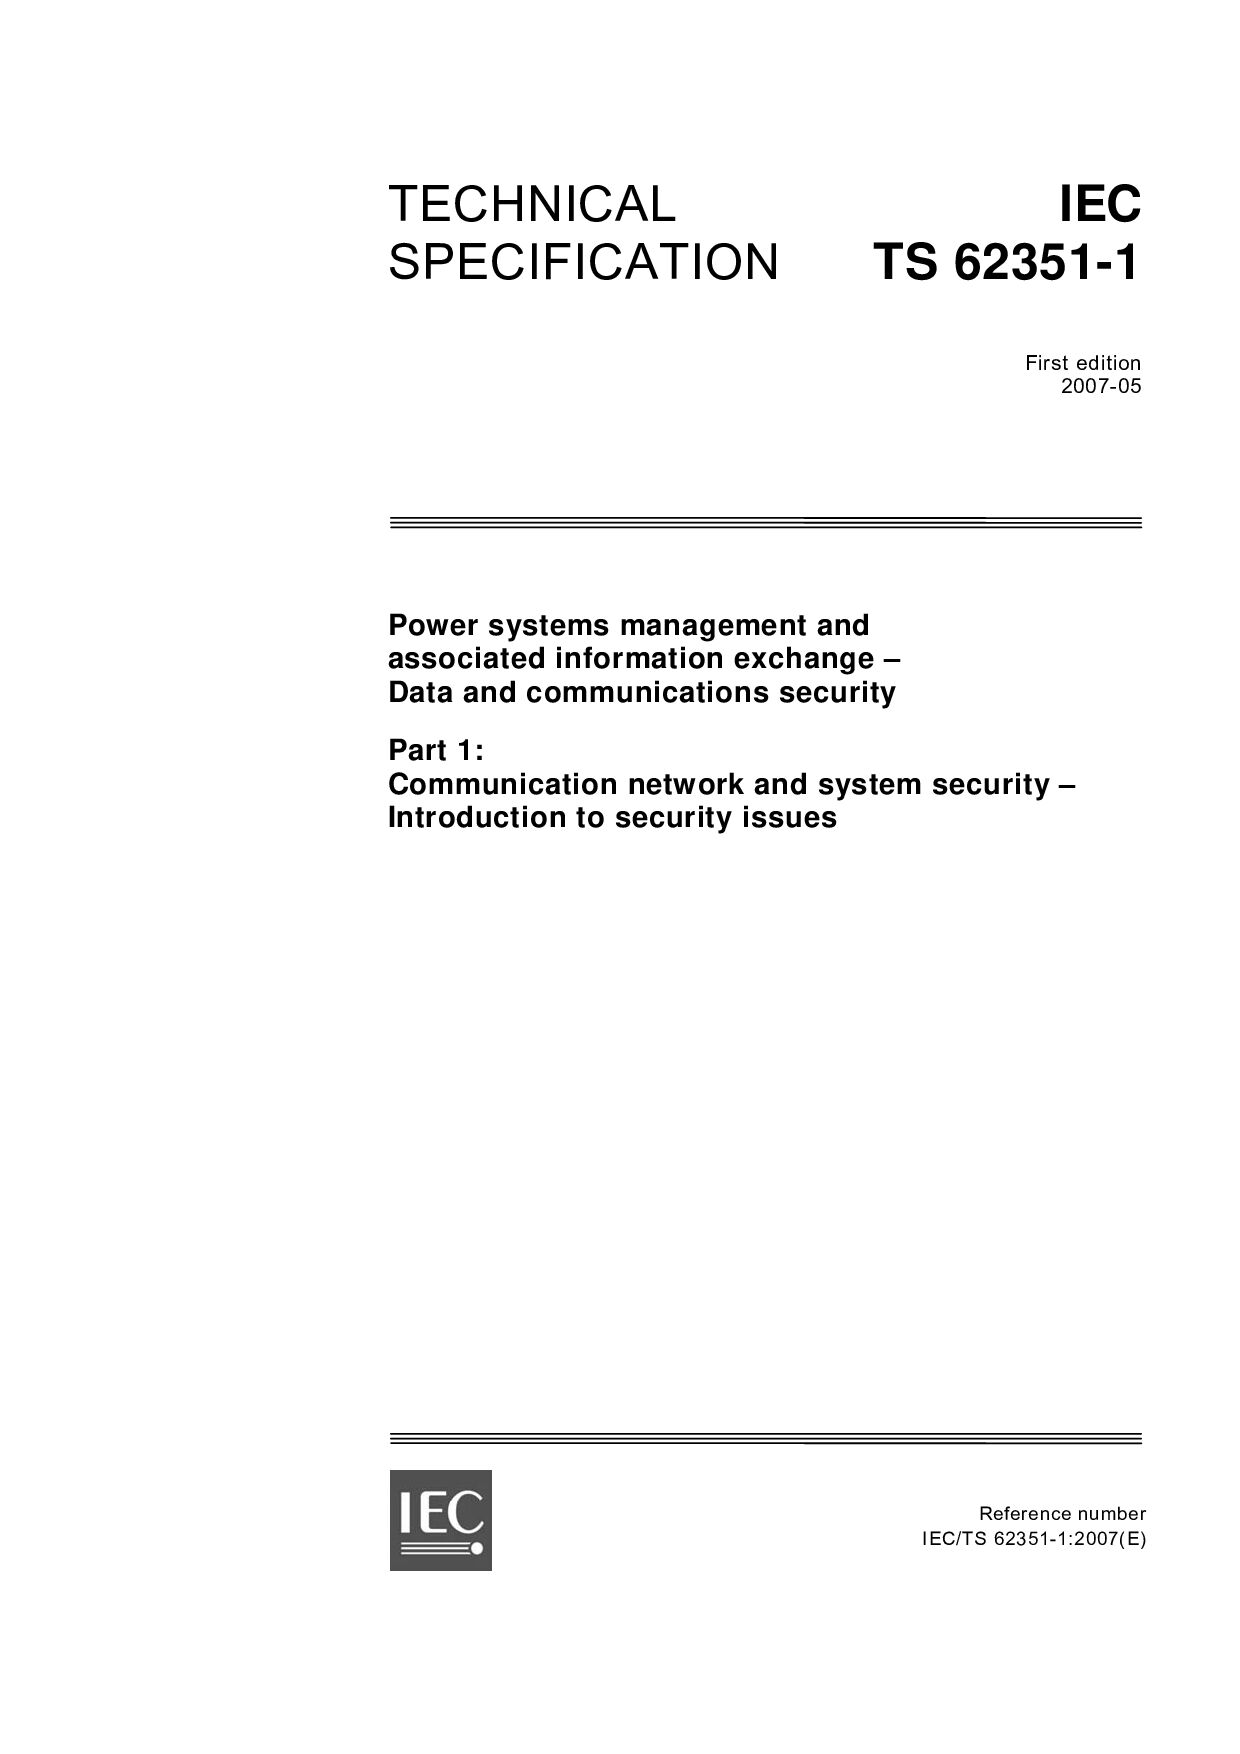 IEC TS 62351-1:2007封面图